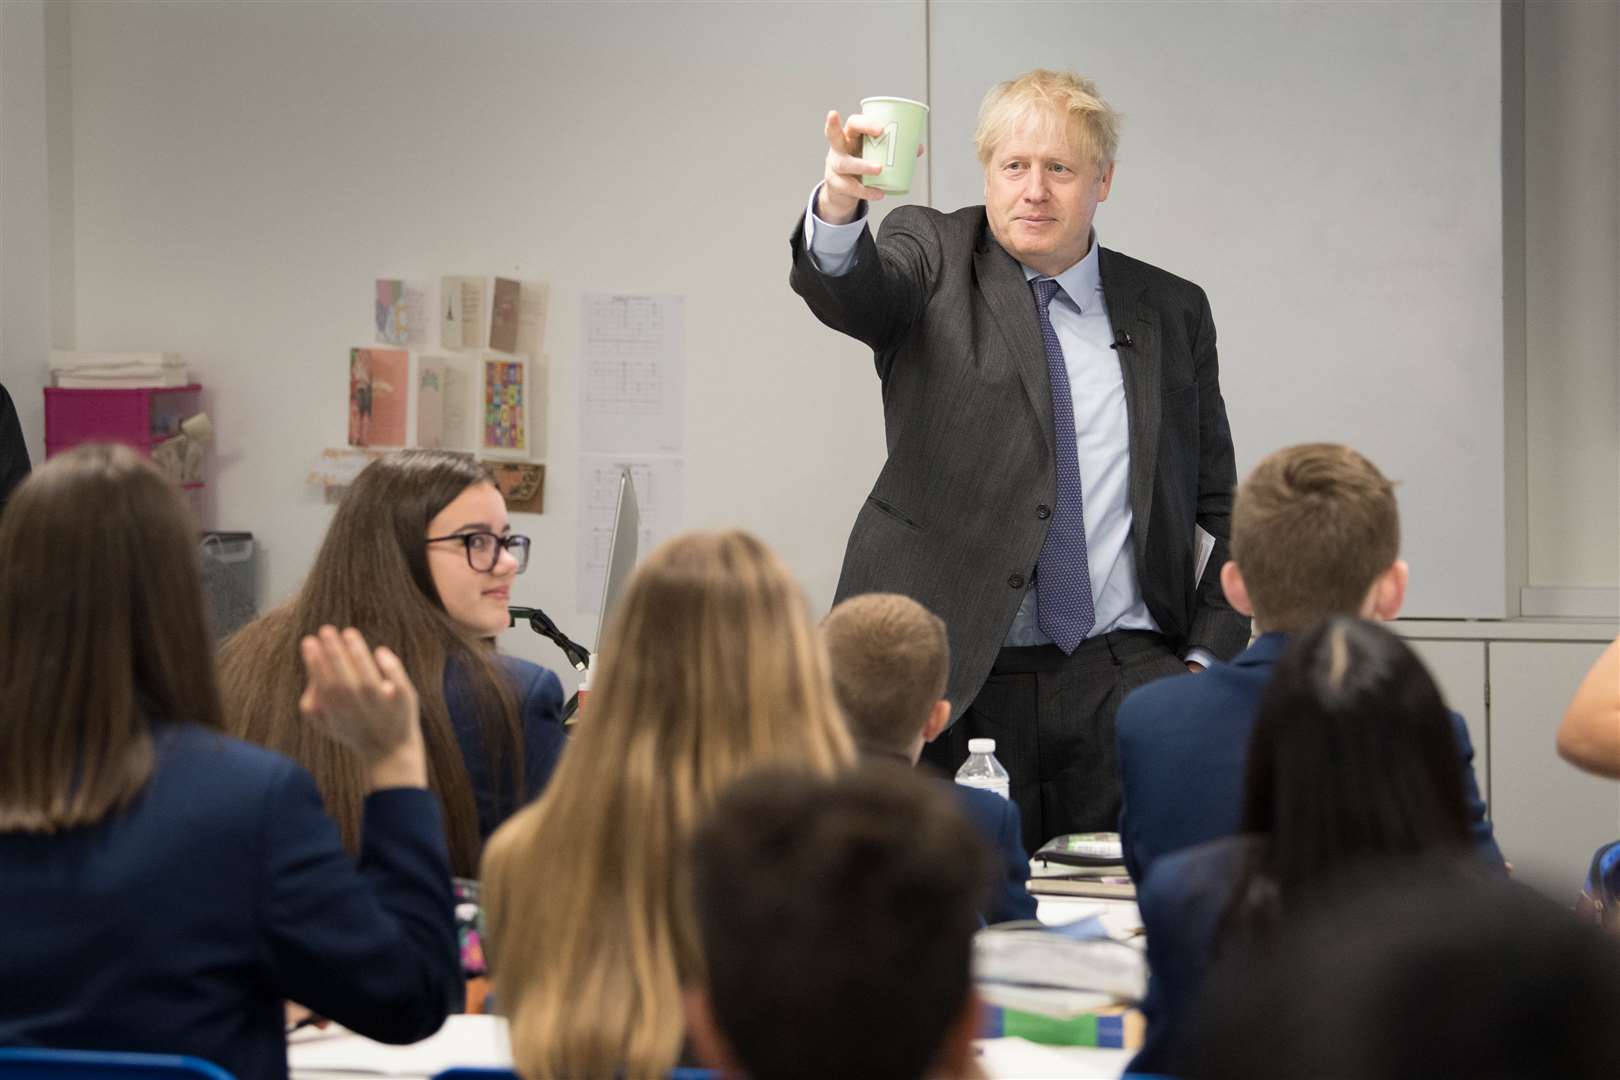 Boris Johnson made a visit to a school on Monday (Stefan Rouseau/PA)